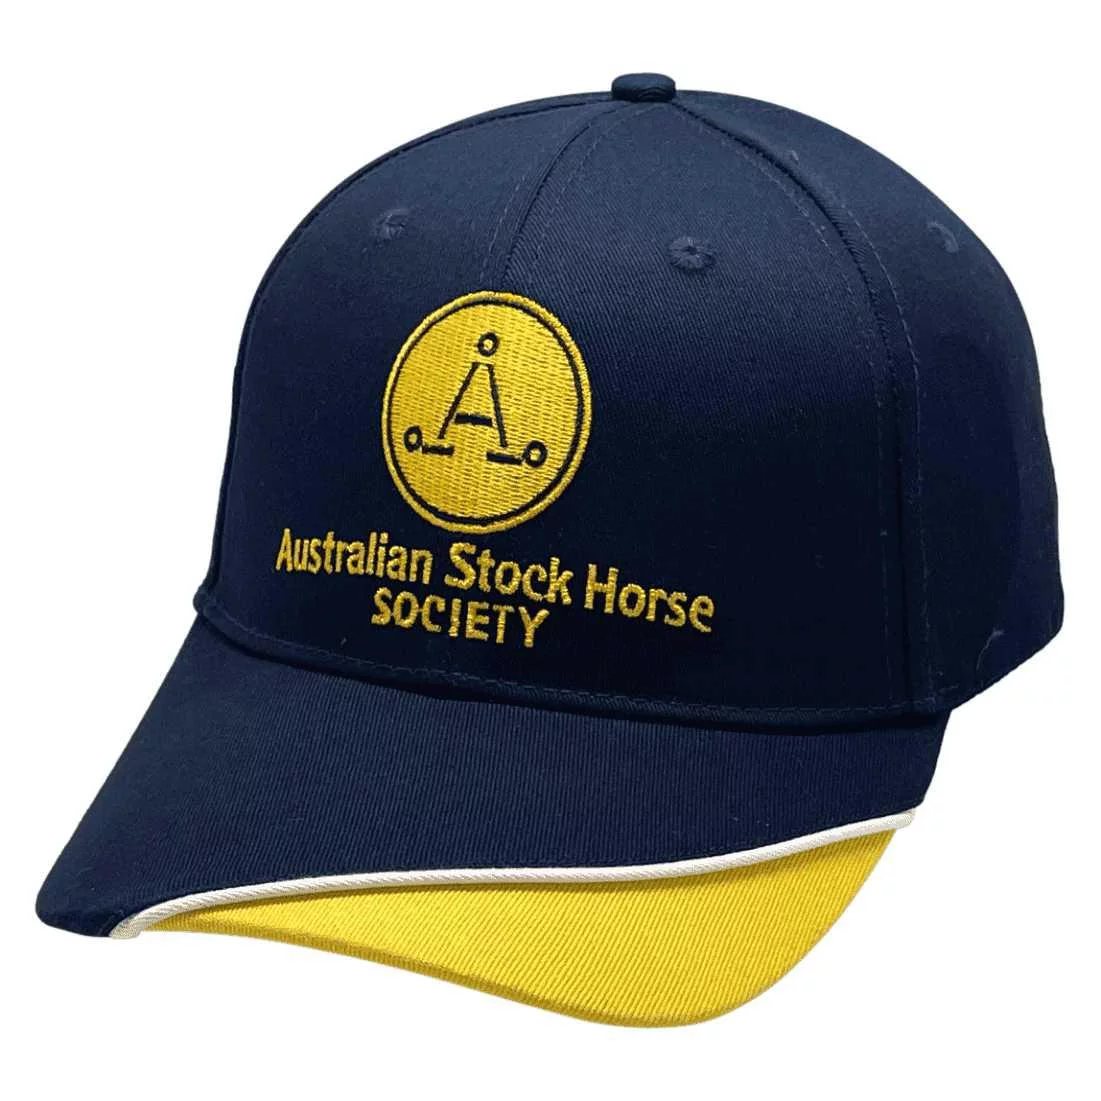 Australian Stock Horse Society Scone NSW Custom Snapback Baseball Cap with Australian Head Fit Crown Size and Navy White Gold Brim Design